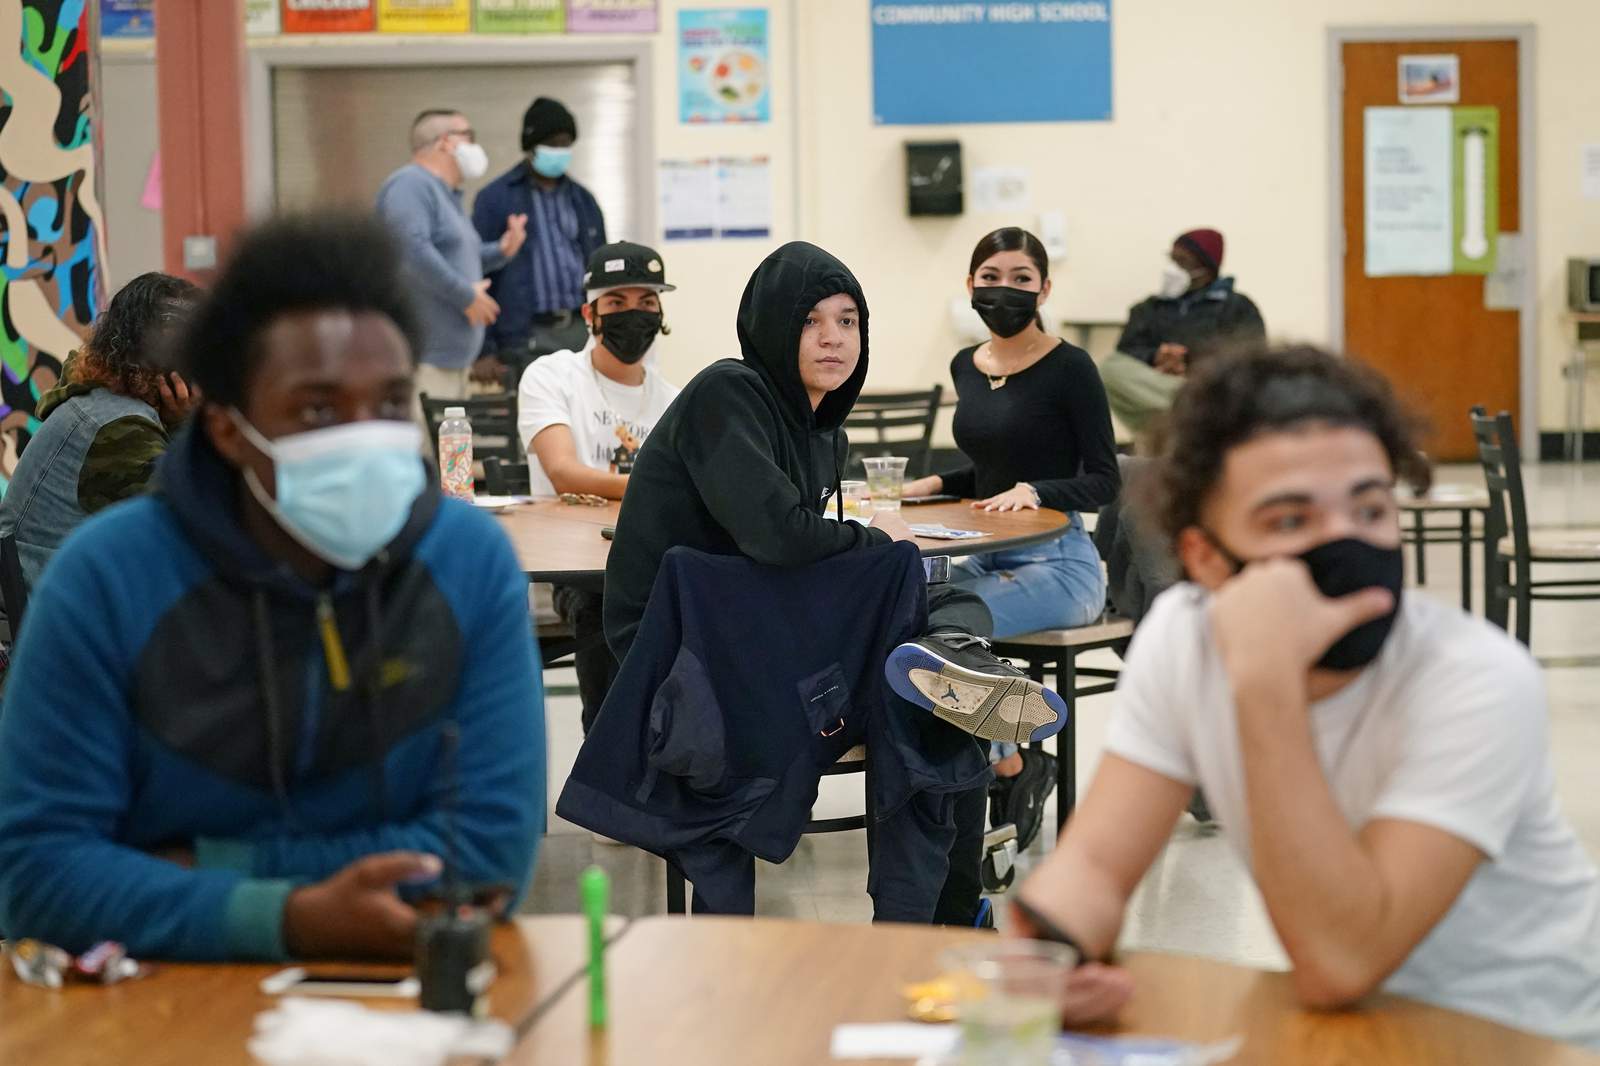 As coronavirus spikes, NYC prepares to close schools again